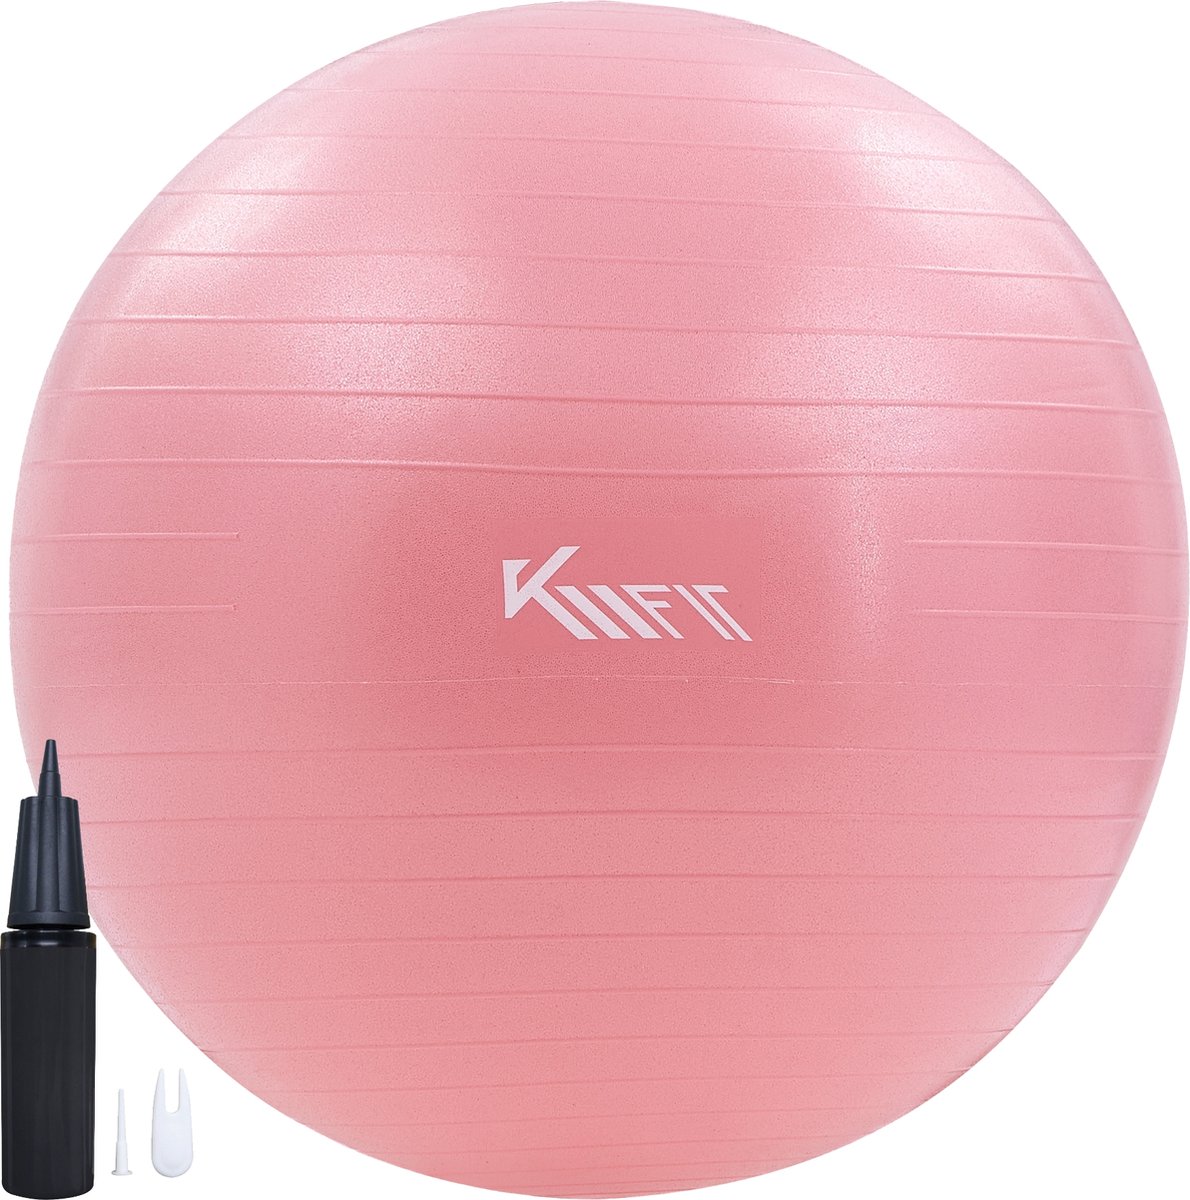 KM-Fit Yoga Bal - 75 cm - Fitness Bal inclusief pomp - Pilates bal - BPA-vrij materiaal - Zwangerschapsbal - Roze